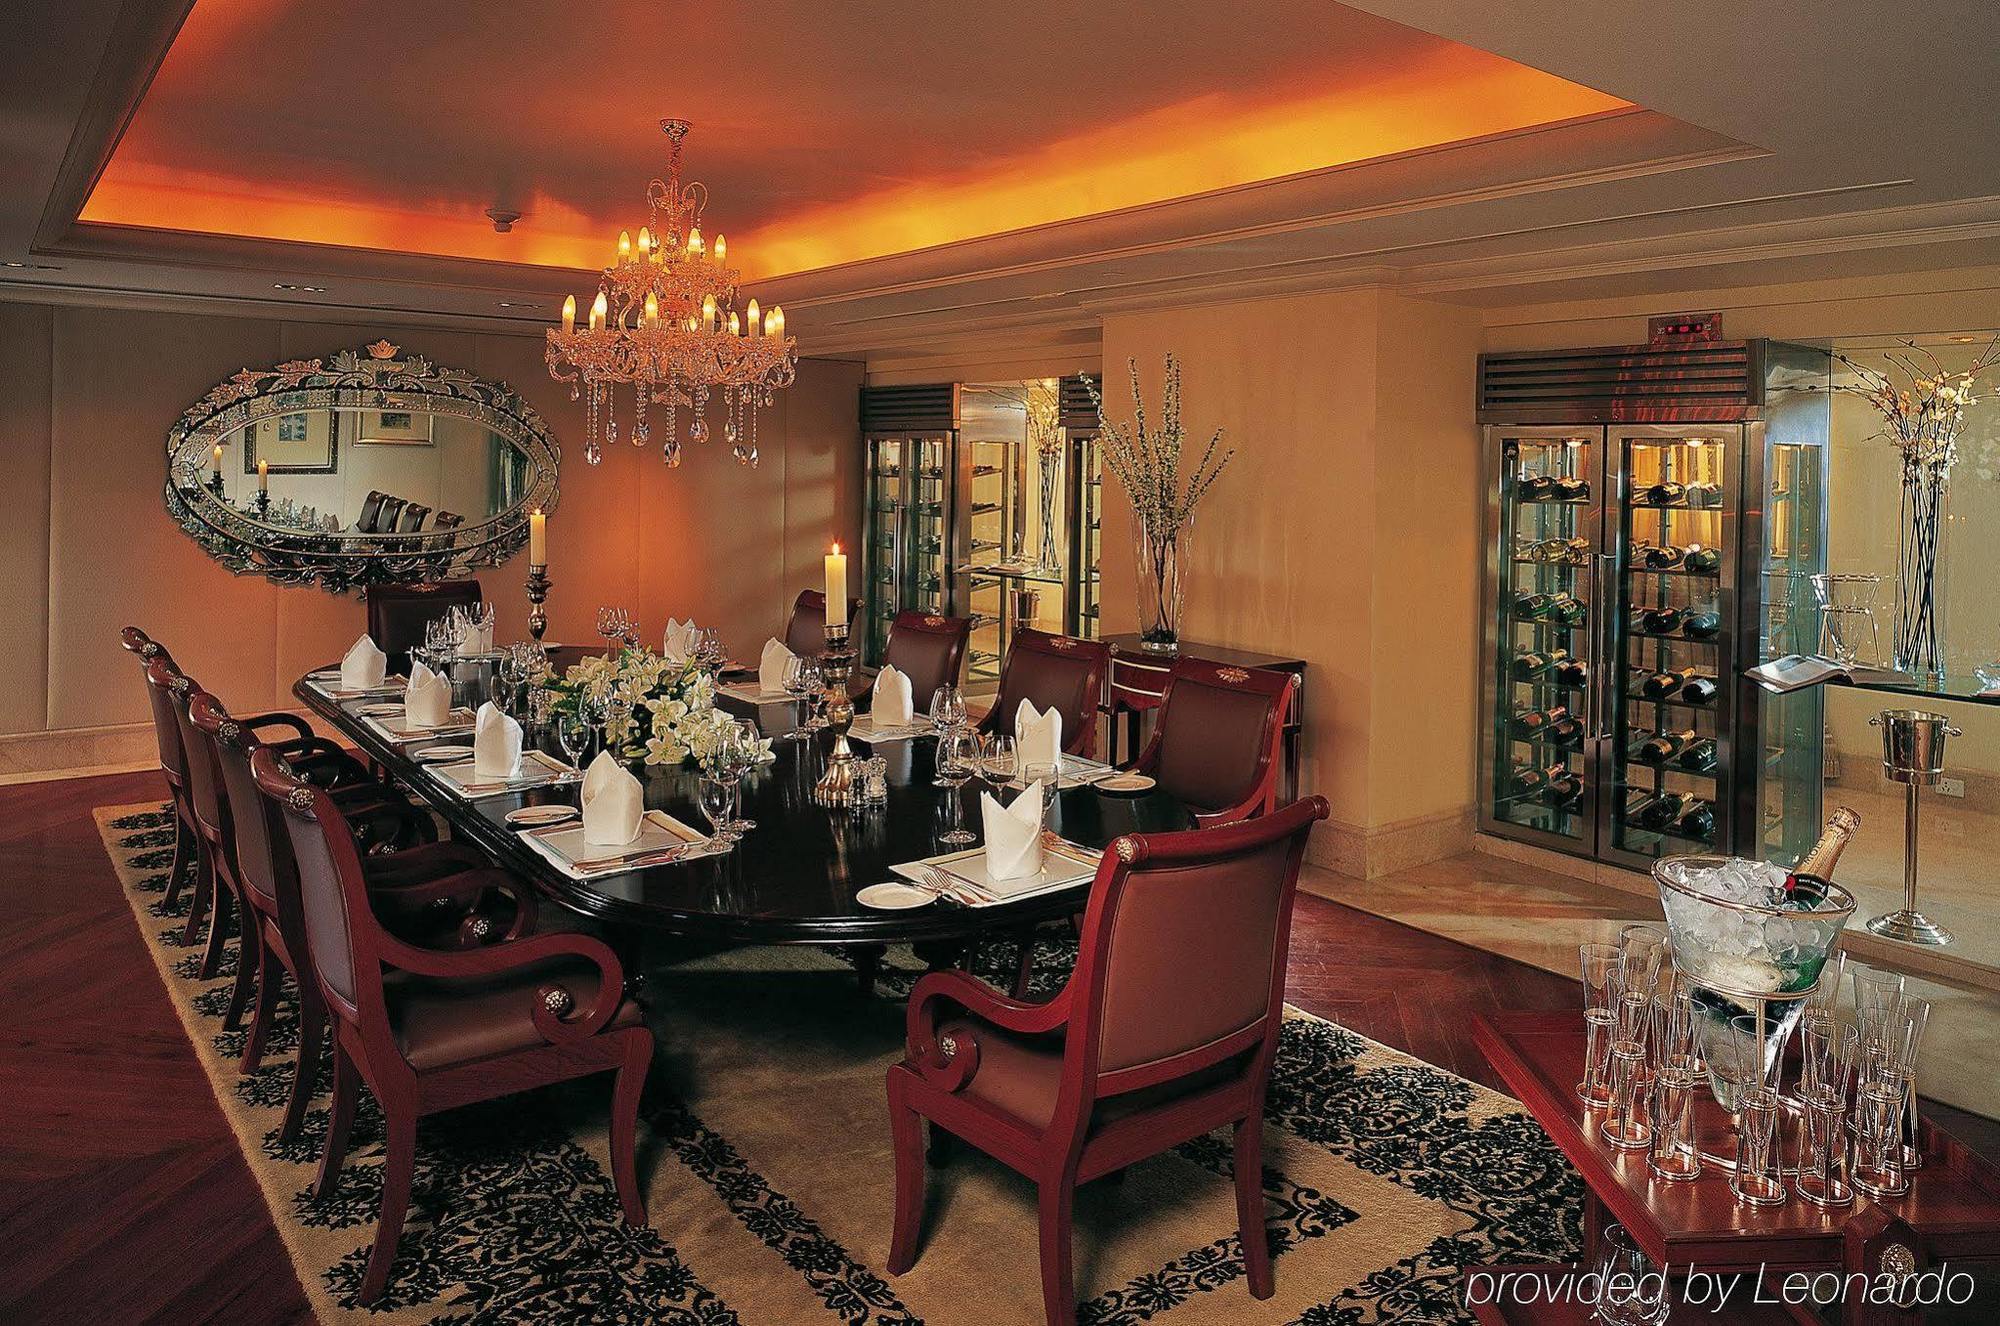 The Leela Palace Bengaluru Restaurant photo